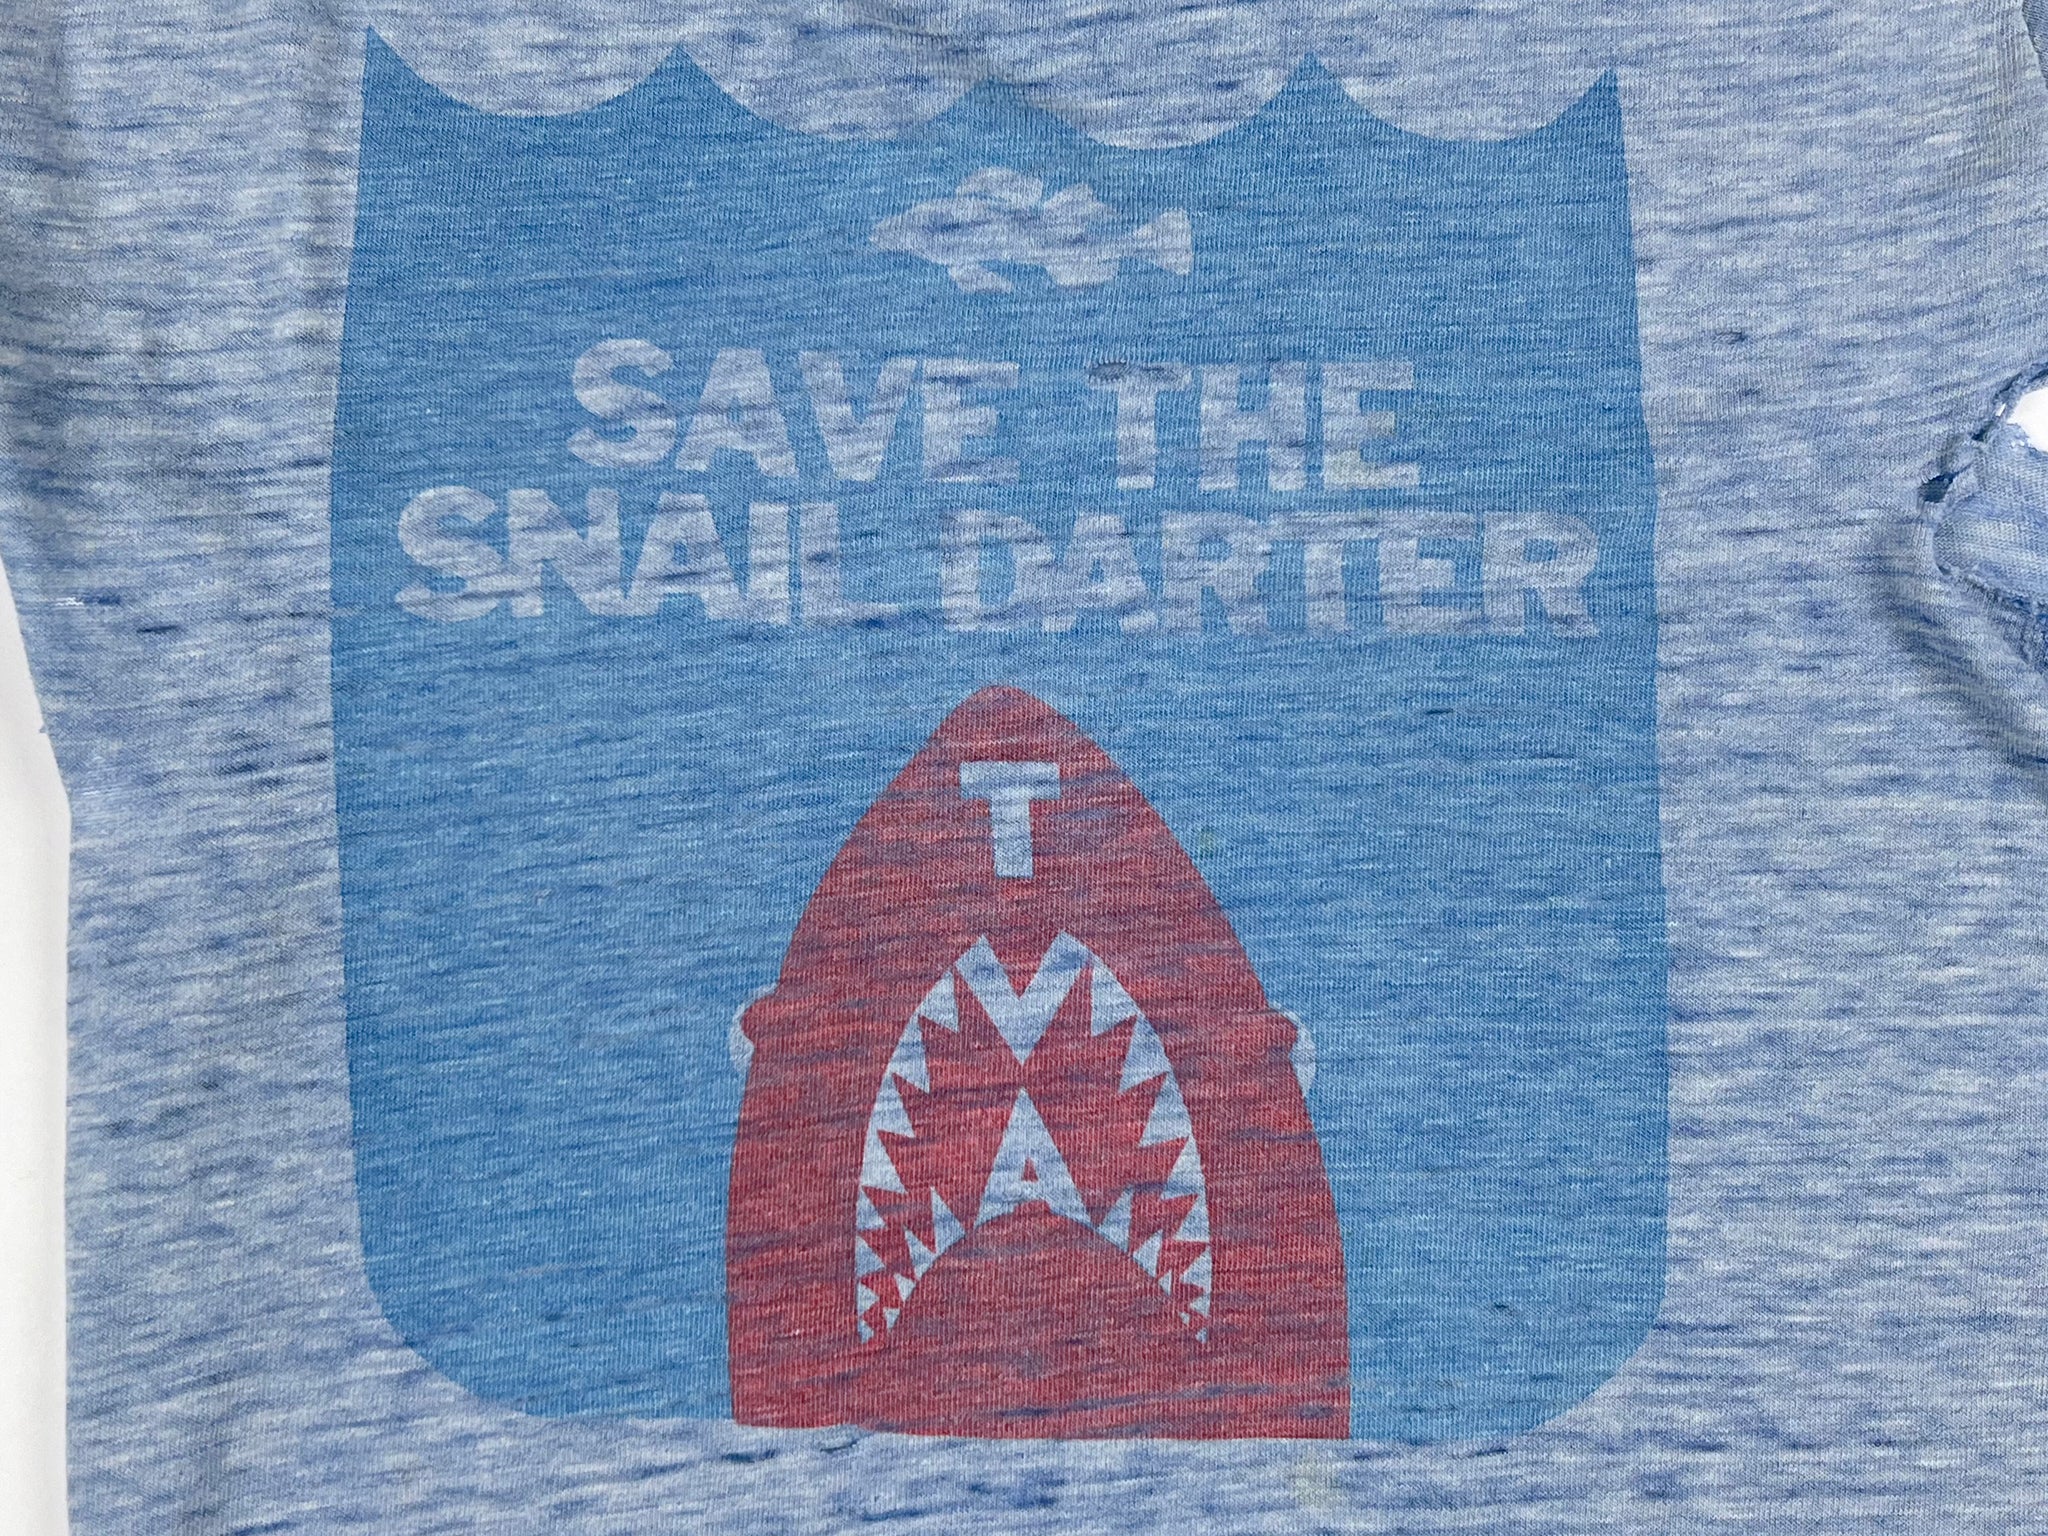 Jaws Reference Snail Darter Thrashed Ringer T-Shirt